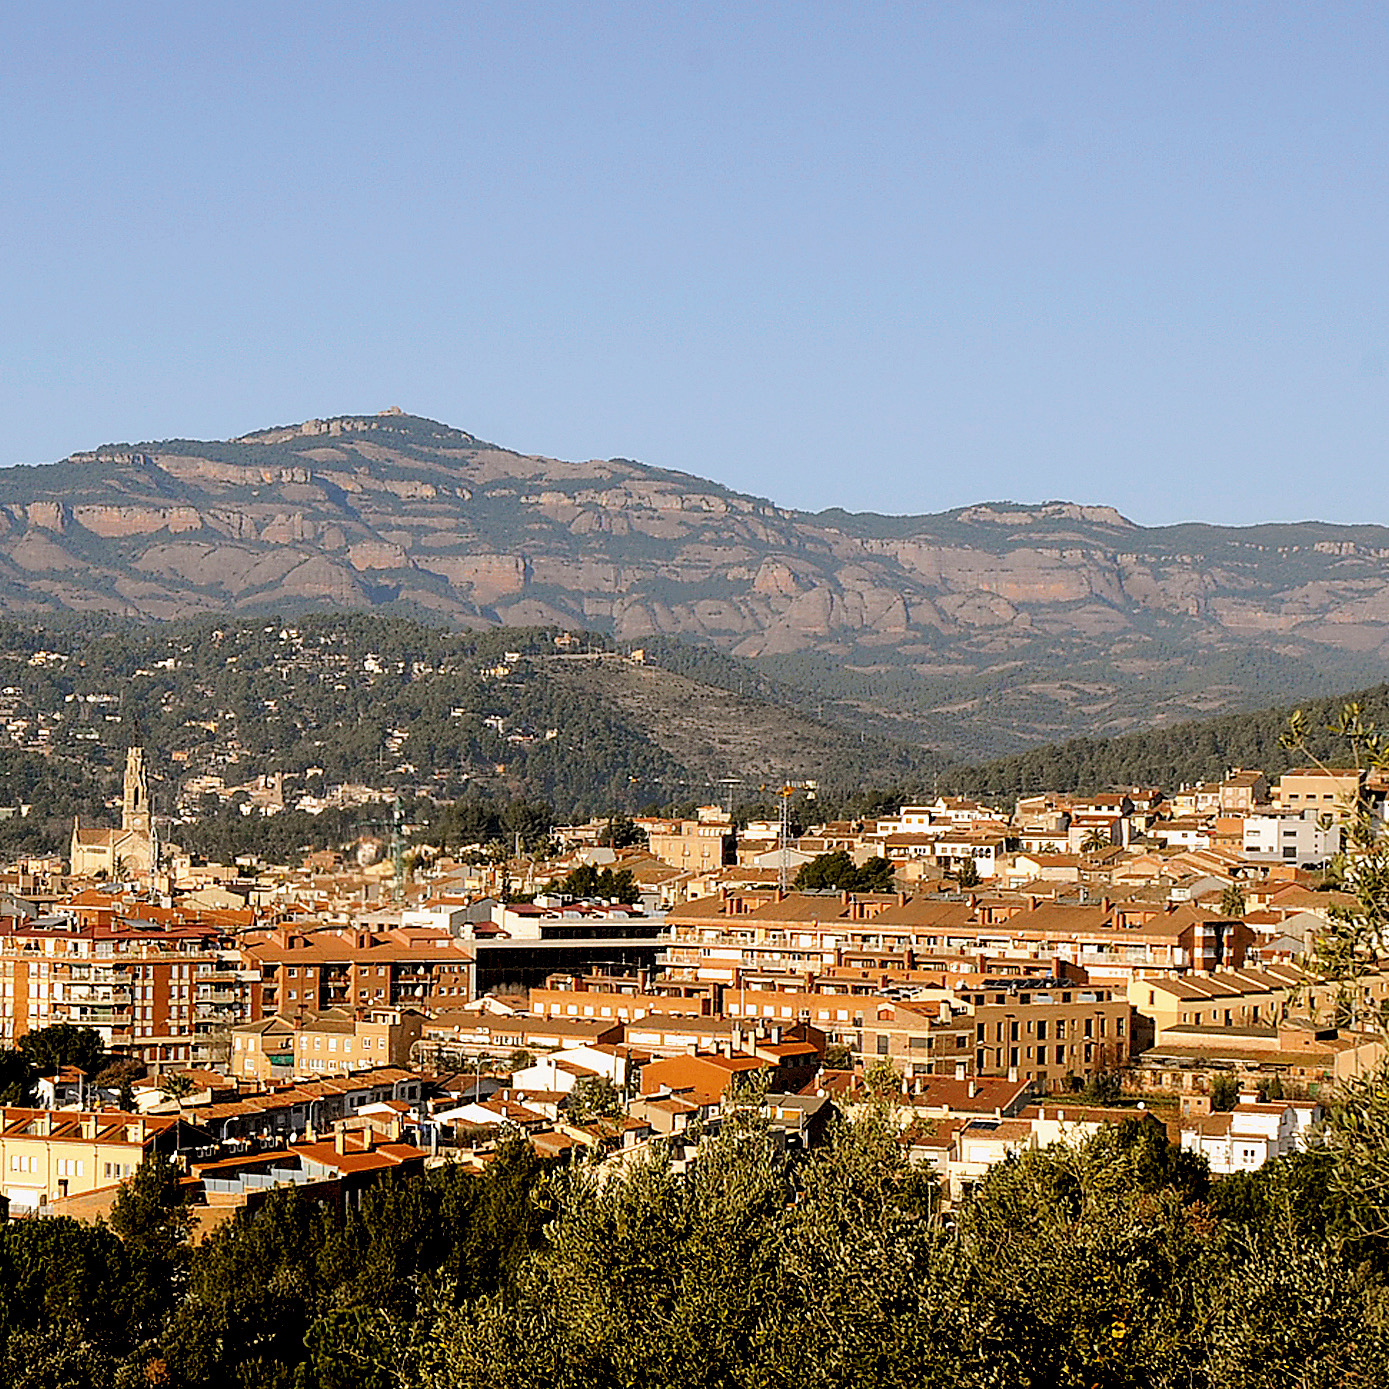 Castellar del Vallès, Spain: My hometown!